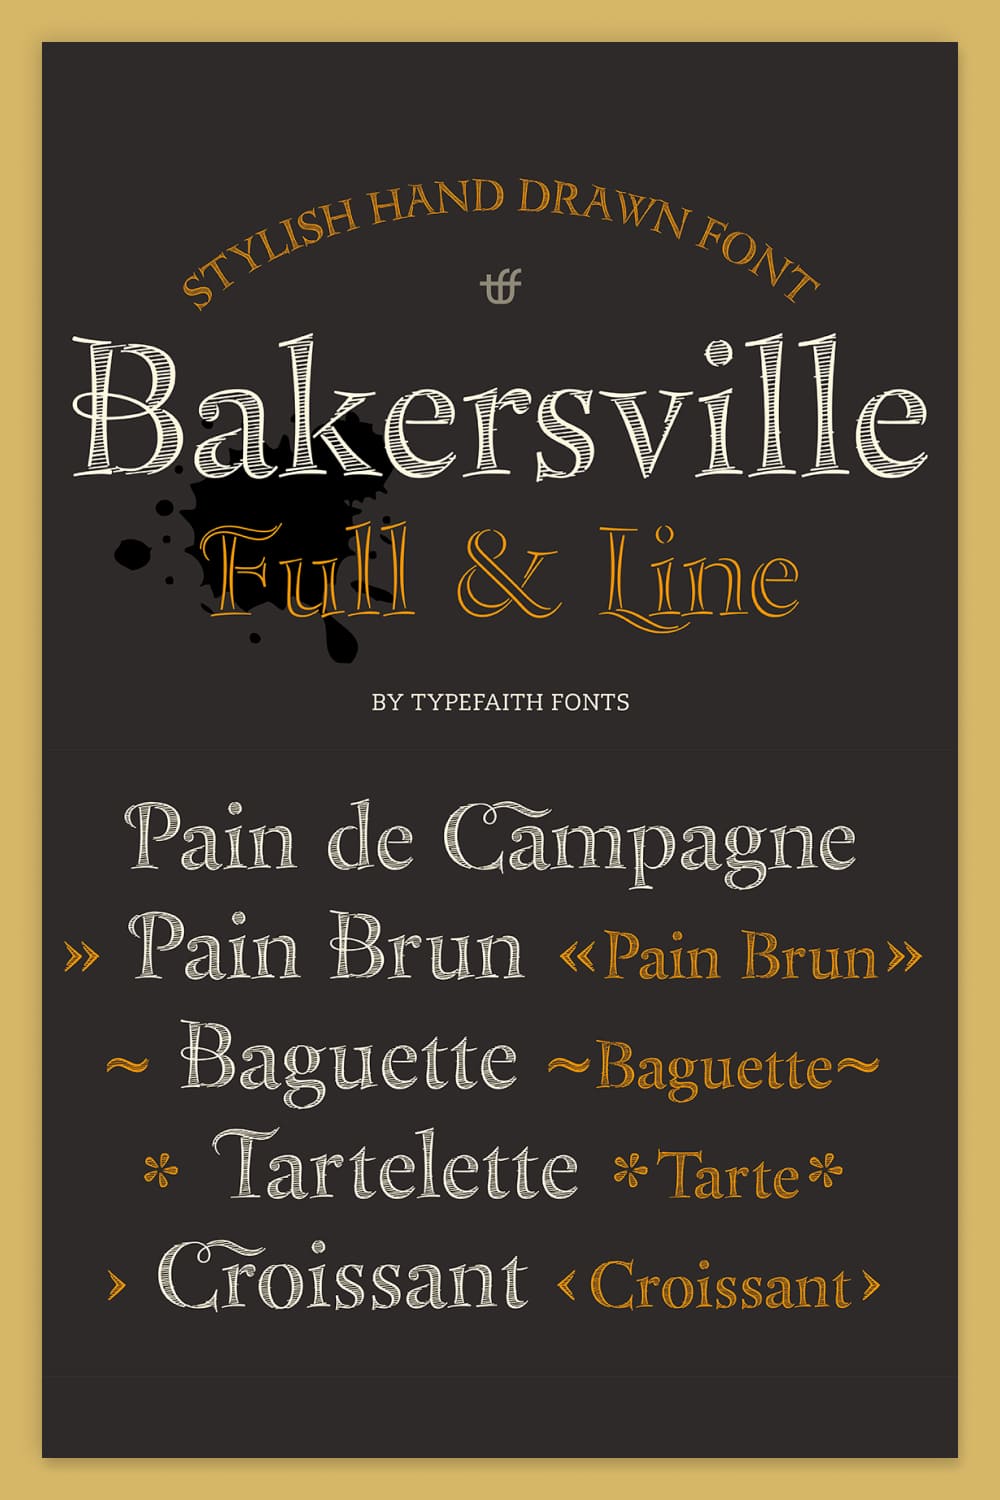 Travel-oriented historical Bakersville font.